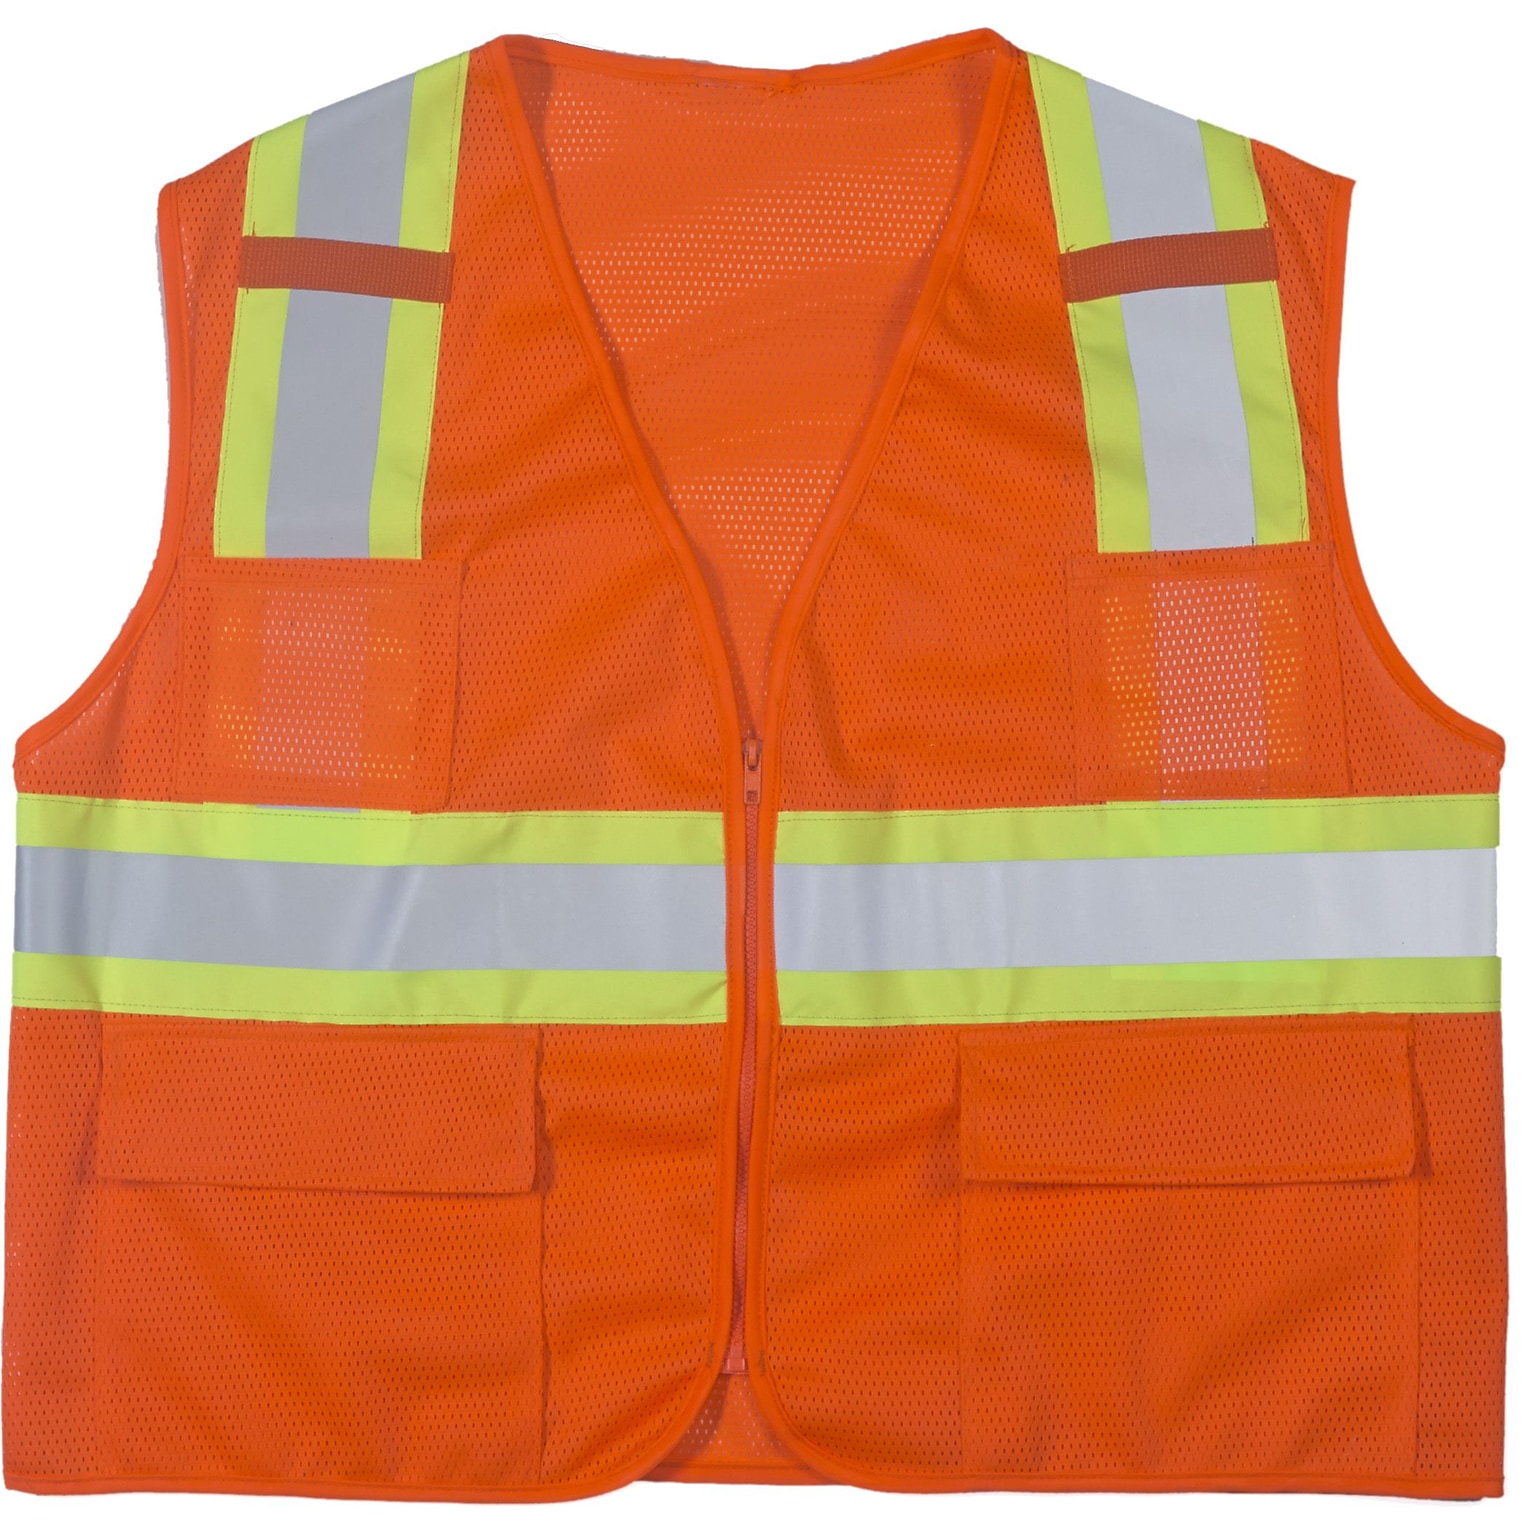 Mutual Industries MiViz High Visibility Sleeveless Safety Vest, ANSI Class R2, Orange, 3XL (16368-1-6)